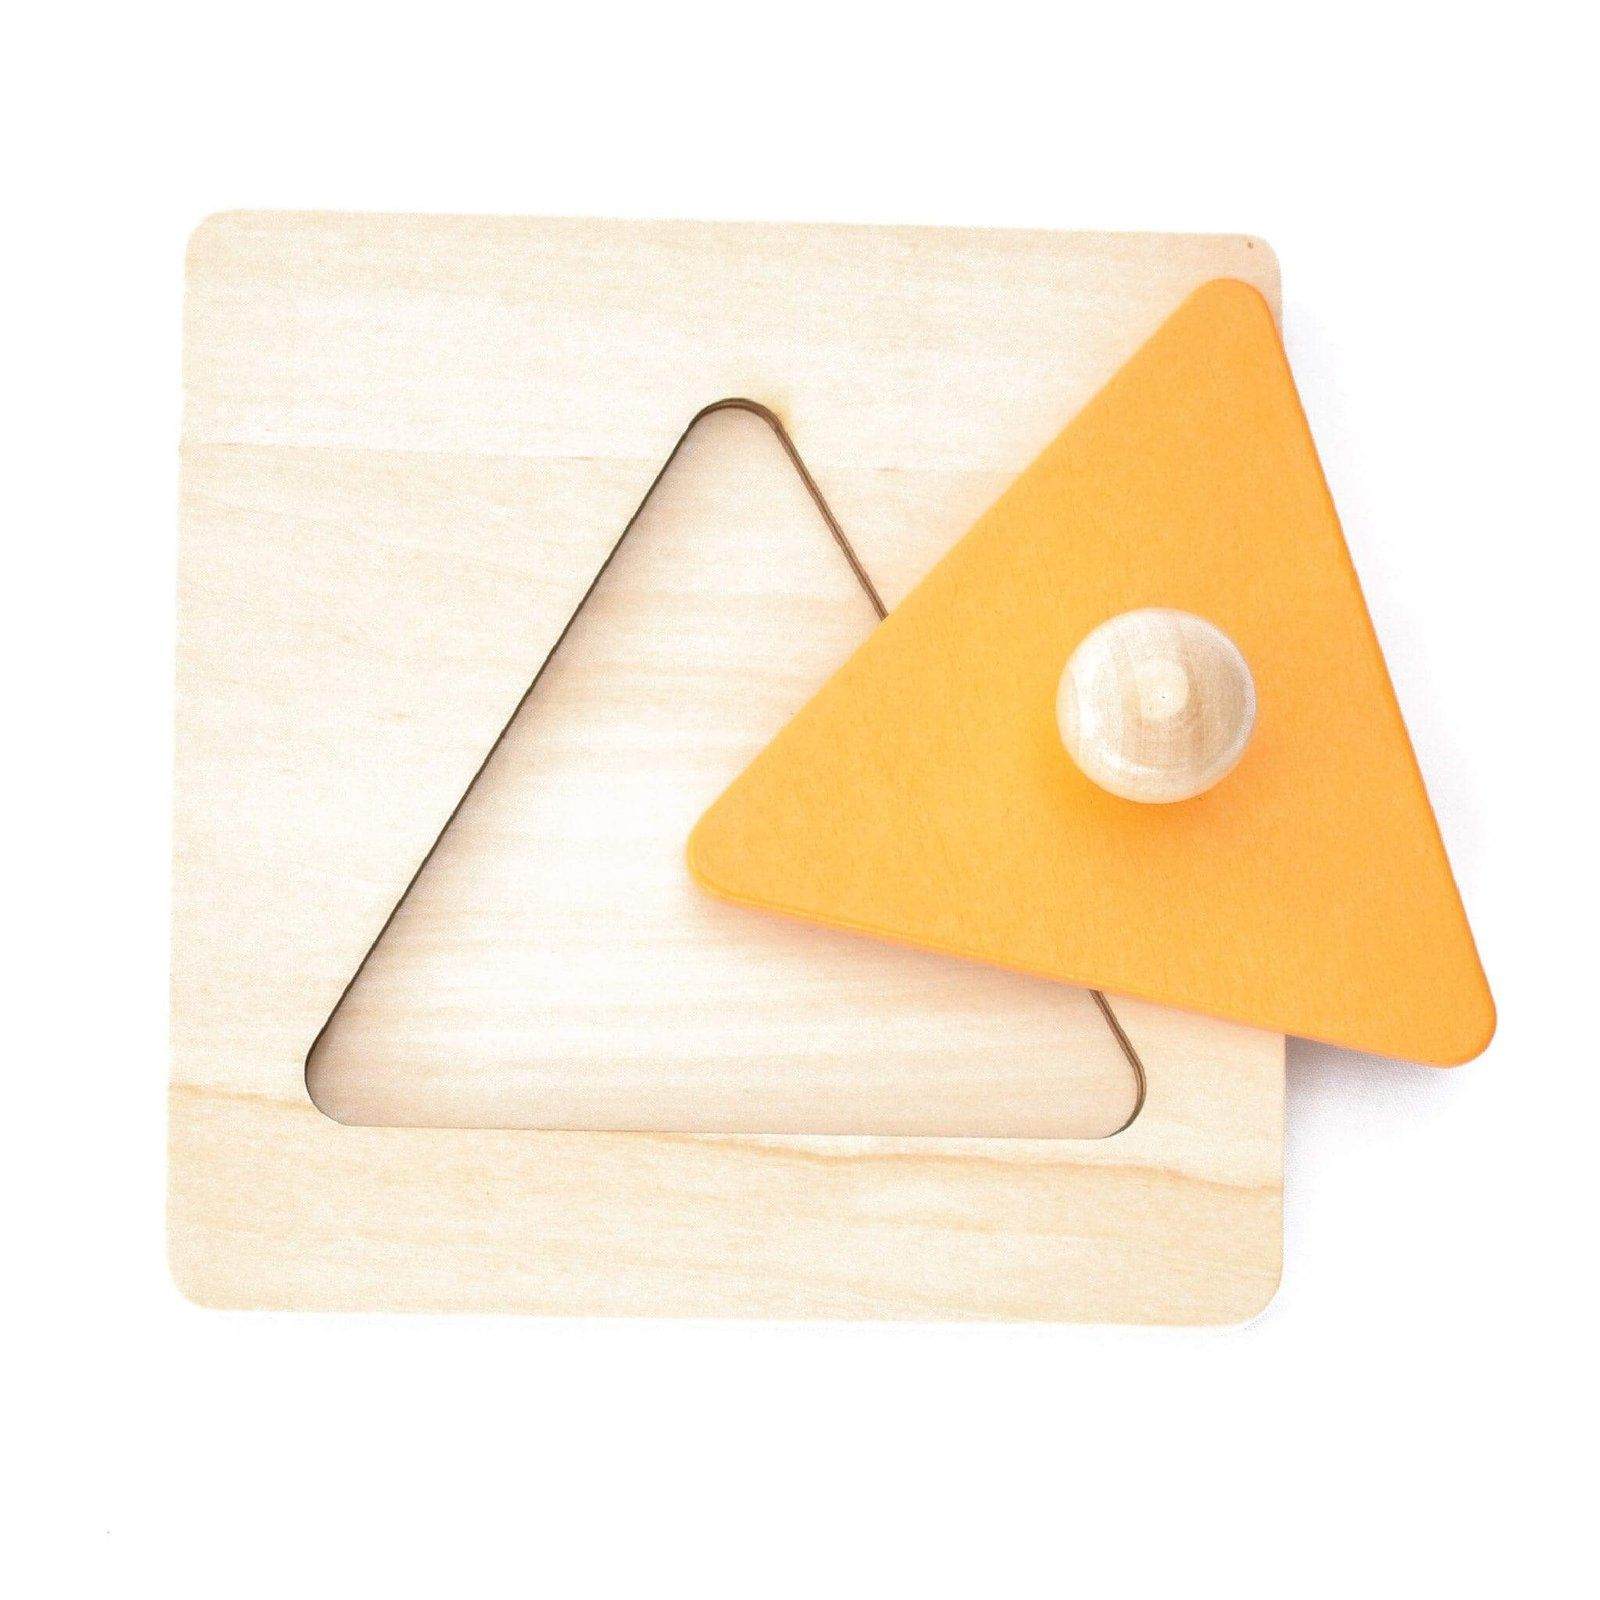 Close up of a orange triangle single shape puzzle